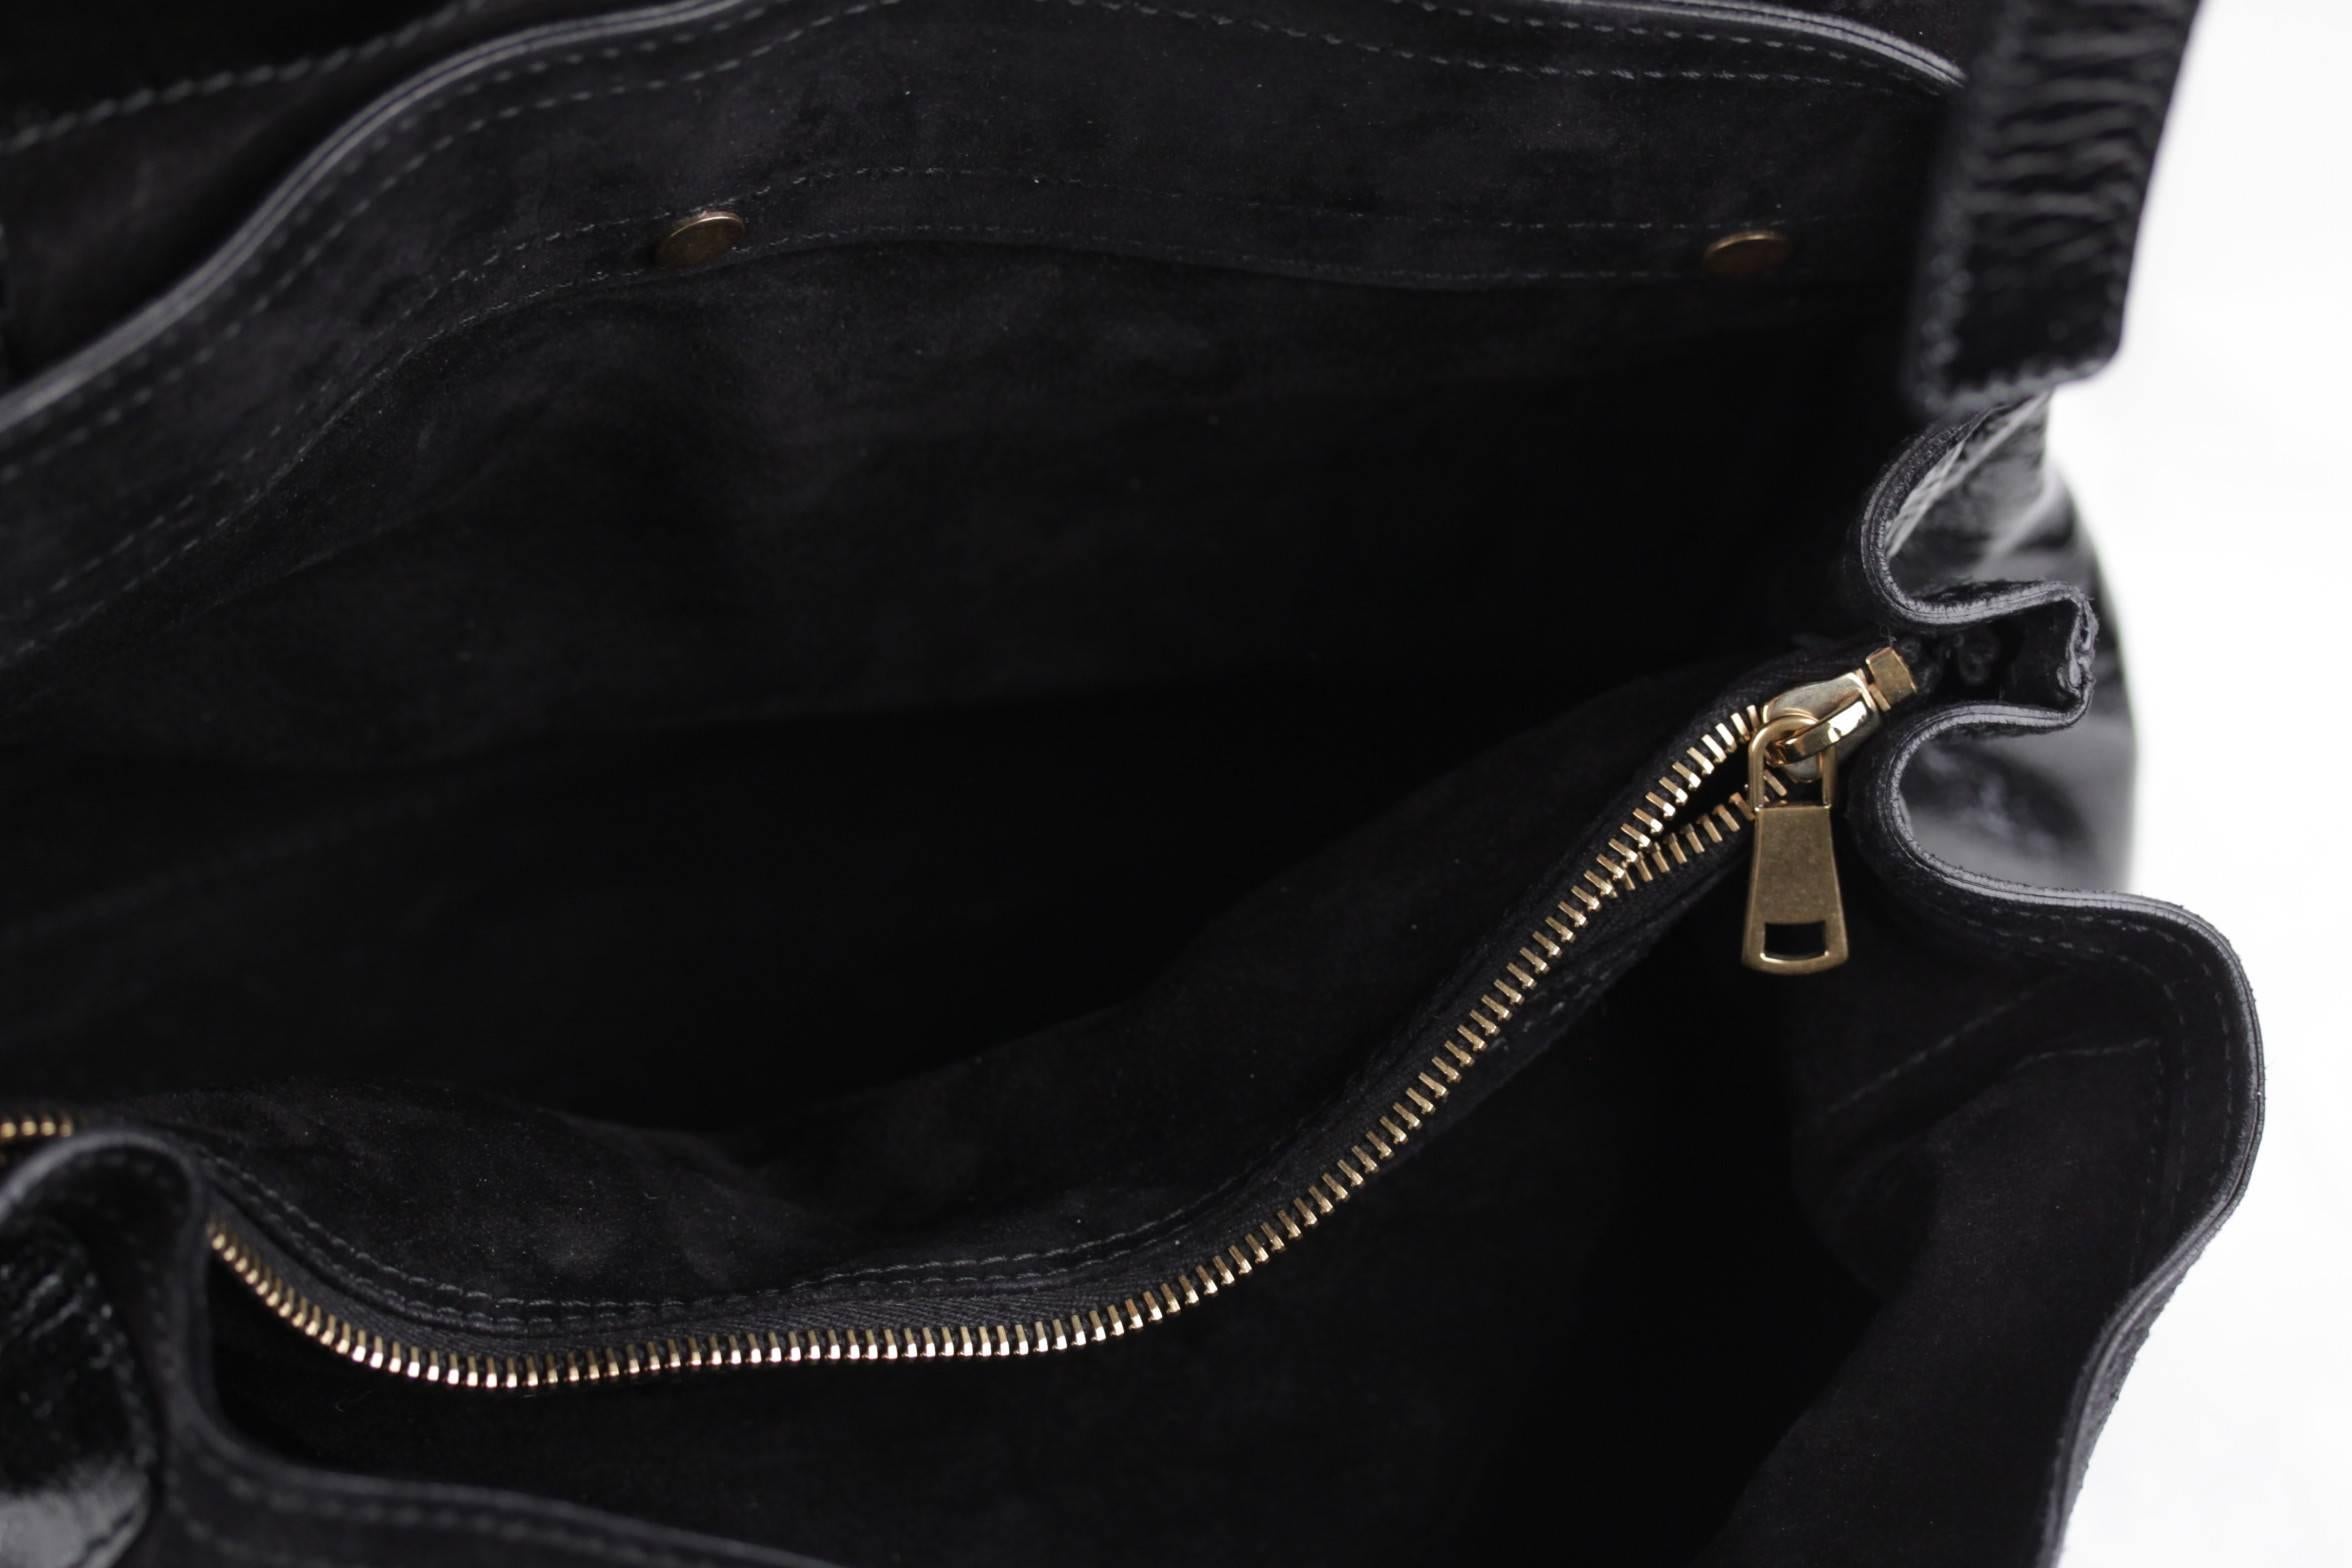 YVES SAINT LAURENT Black Patent Leather MUSE TWO 2 Satchel TOTE Handbag 2